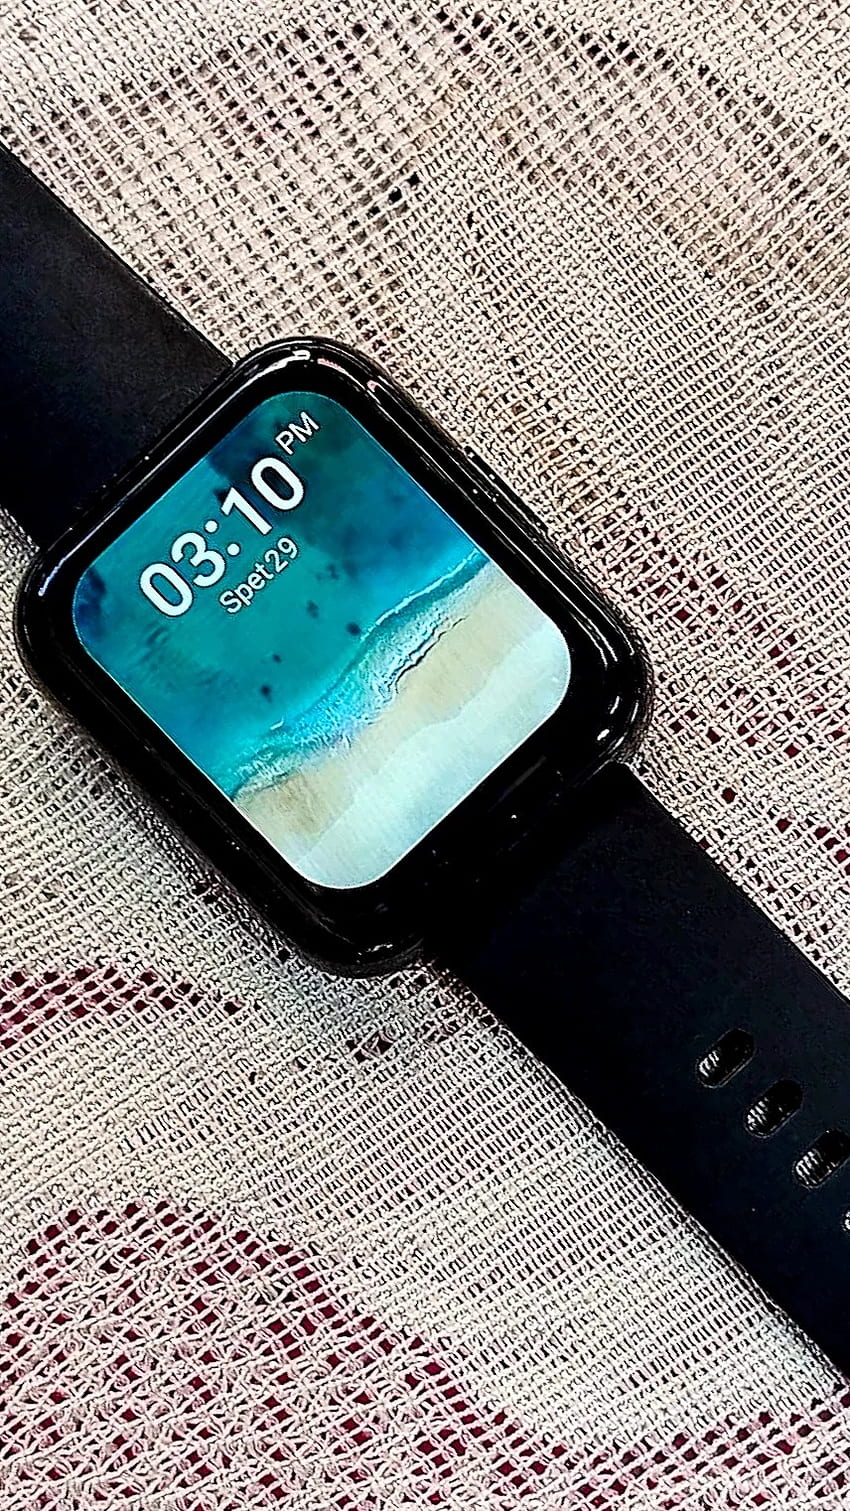 Dizo Watch R, Smart Watch HD phone wallpaper